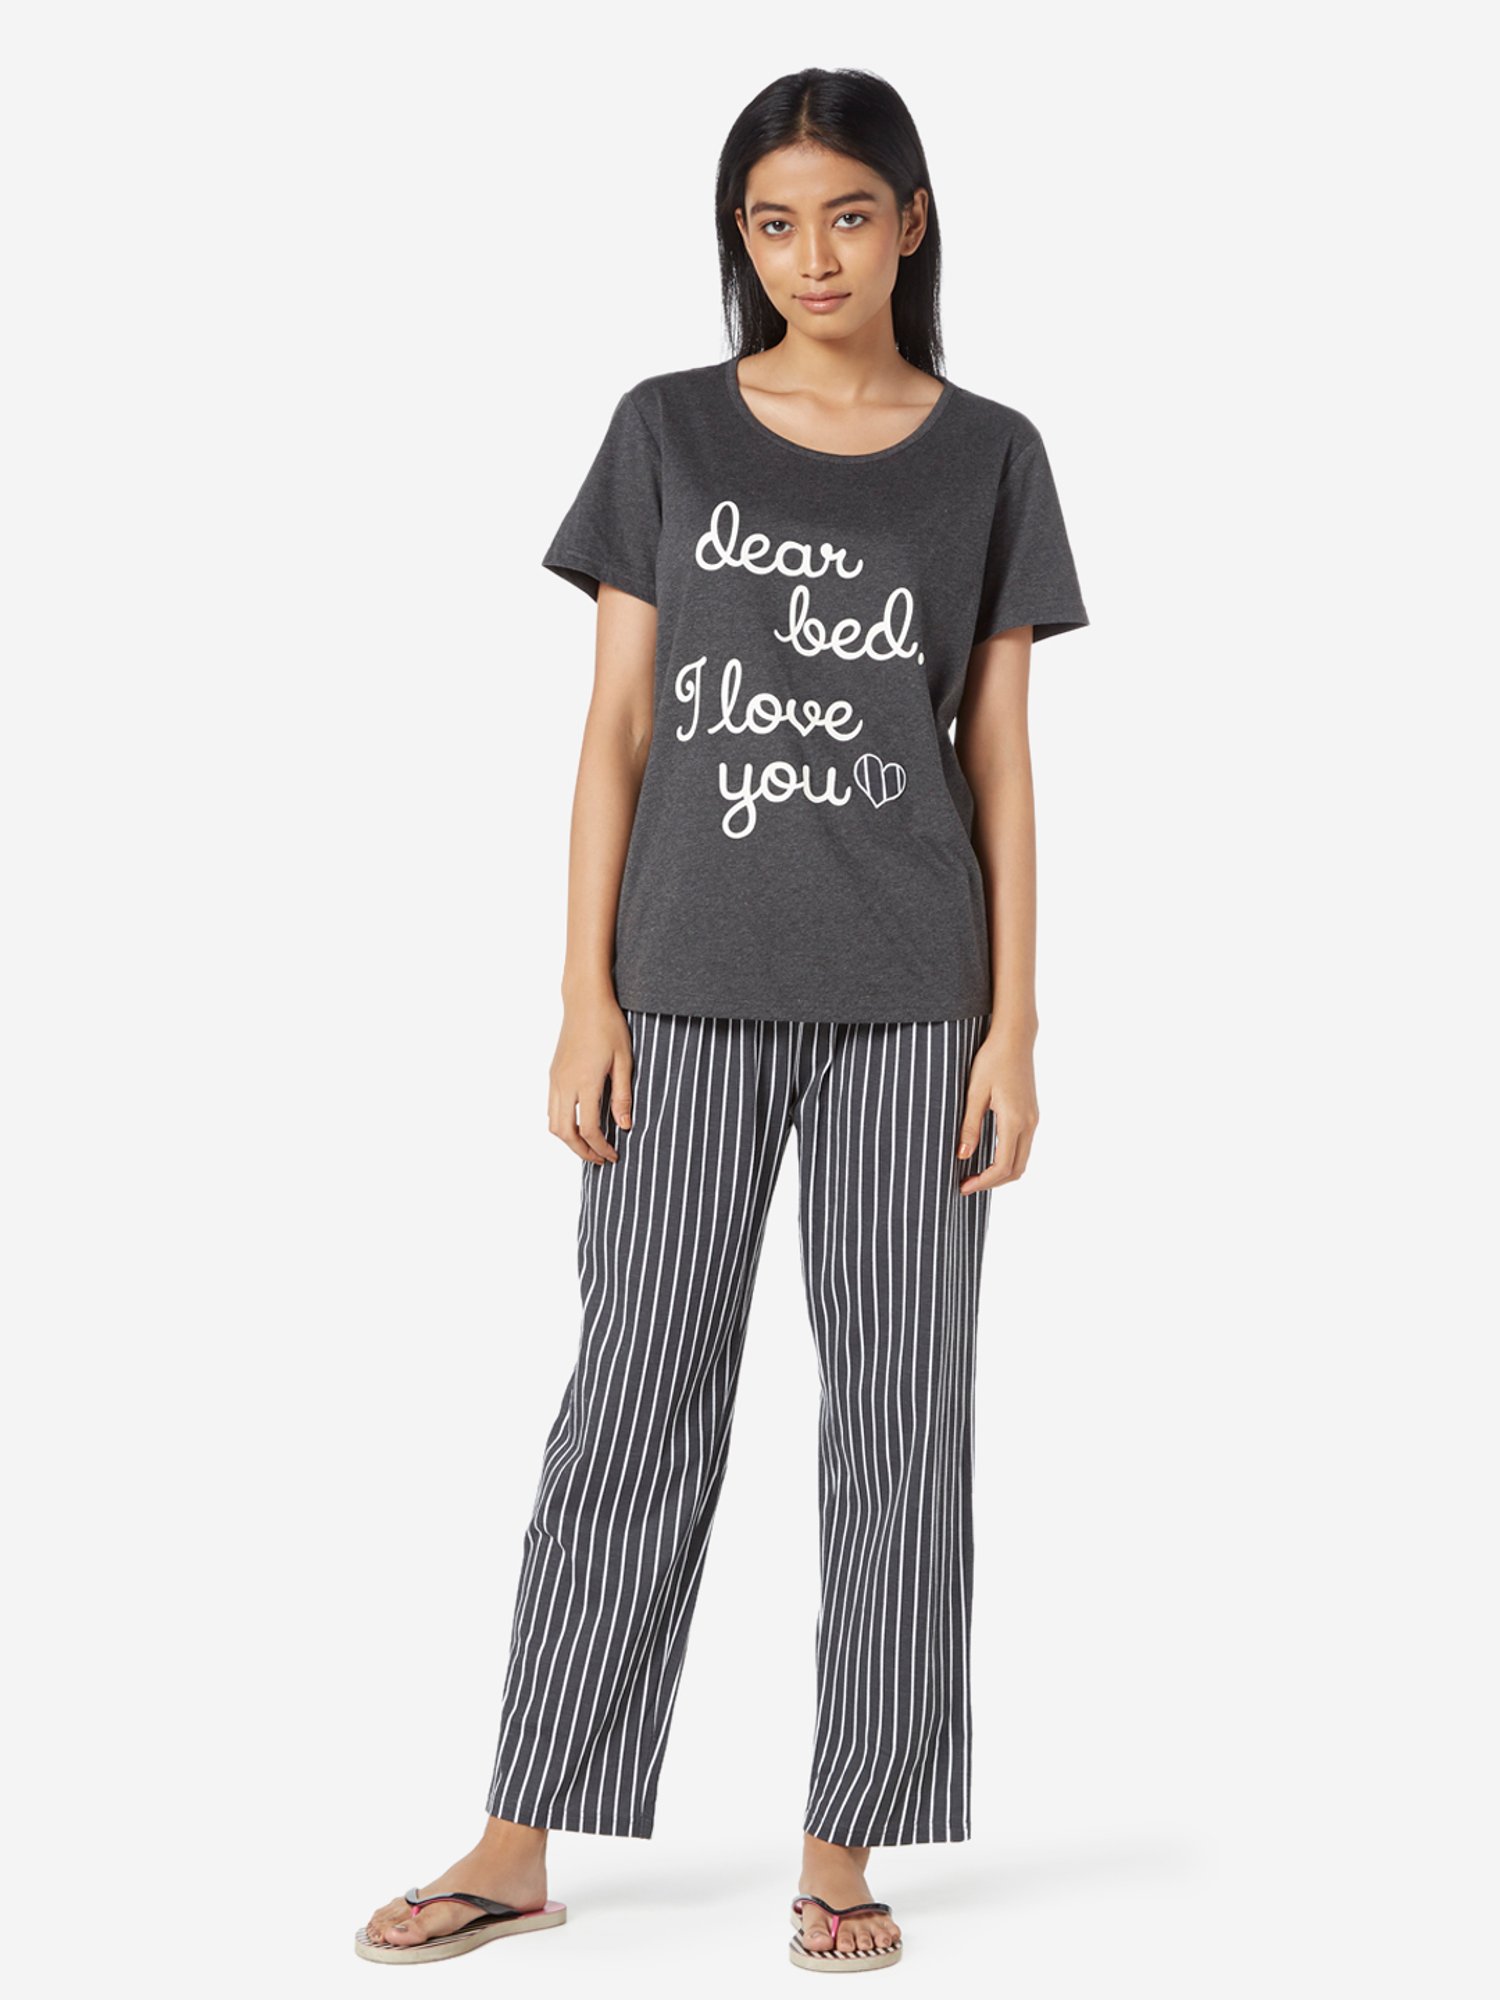 Wunderlove Violet Typographic Printed T-Shirt & Checked Pyjamas Set